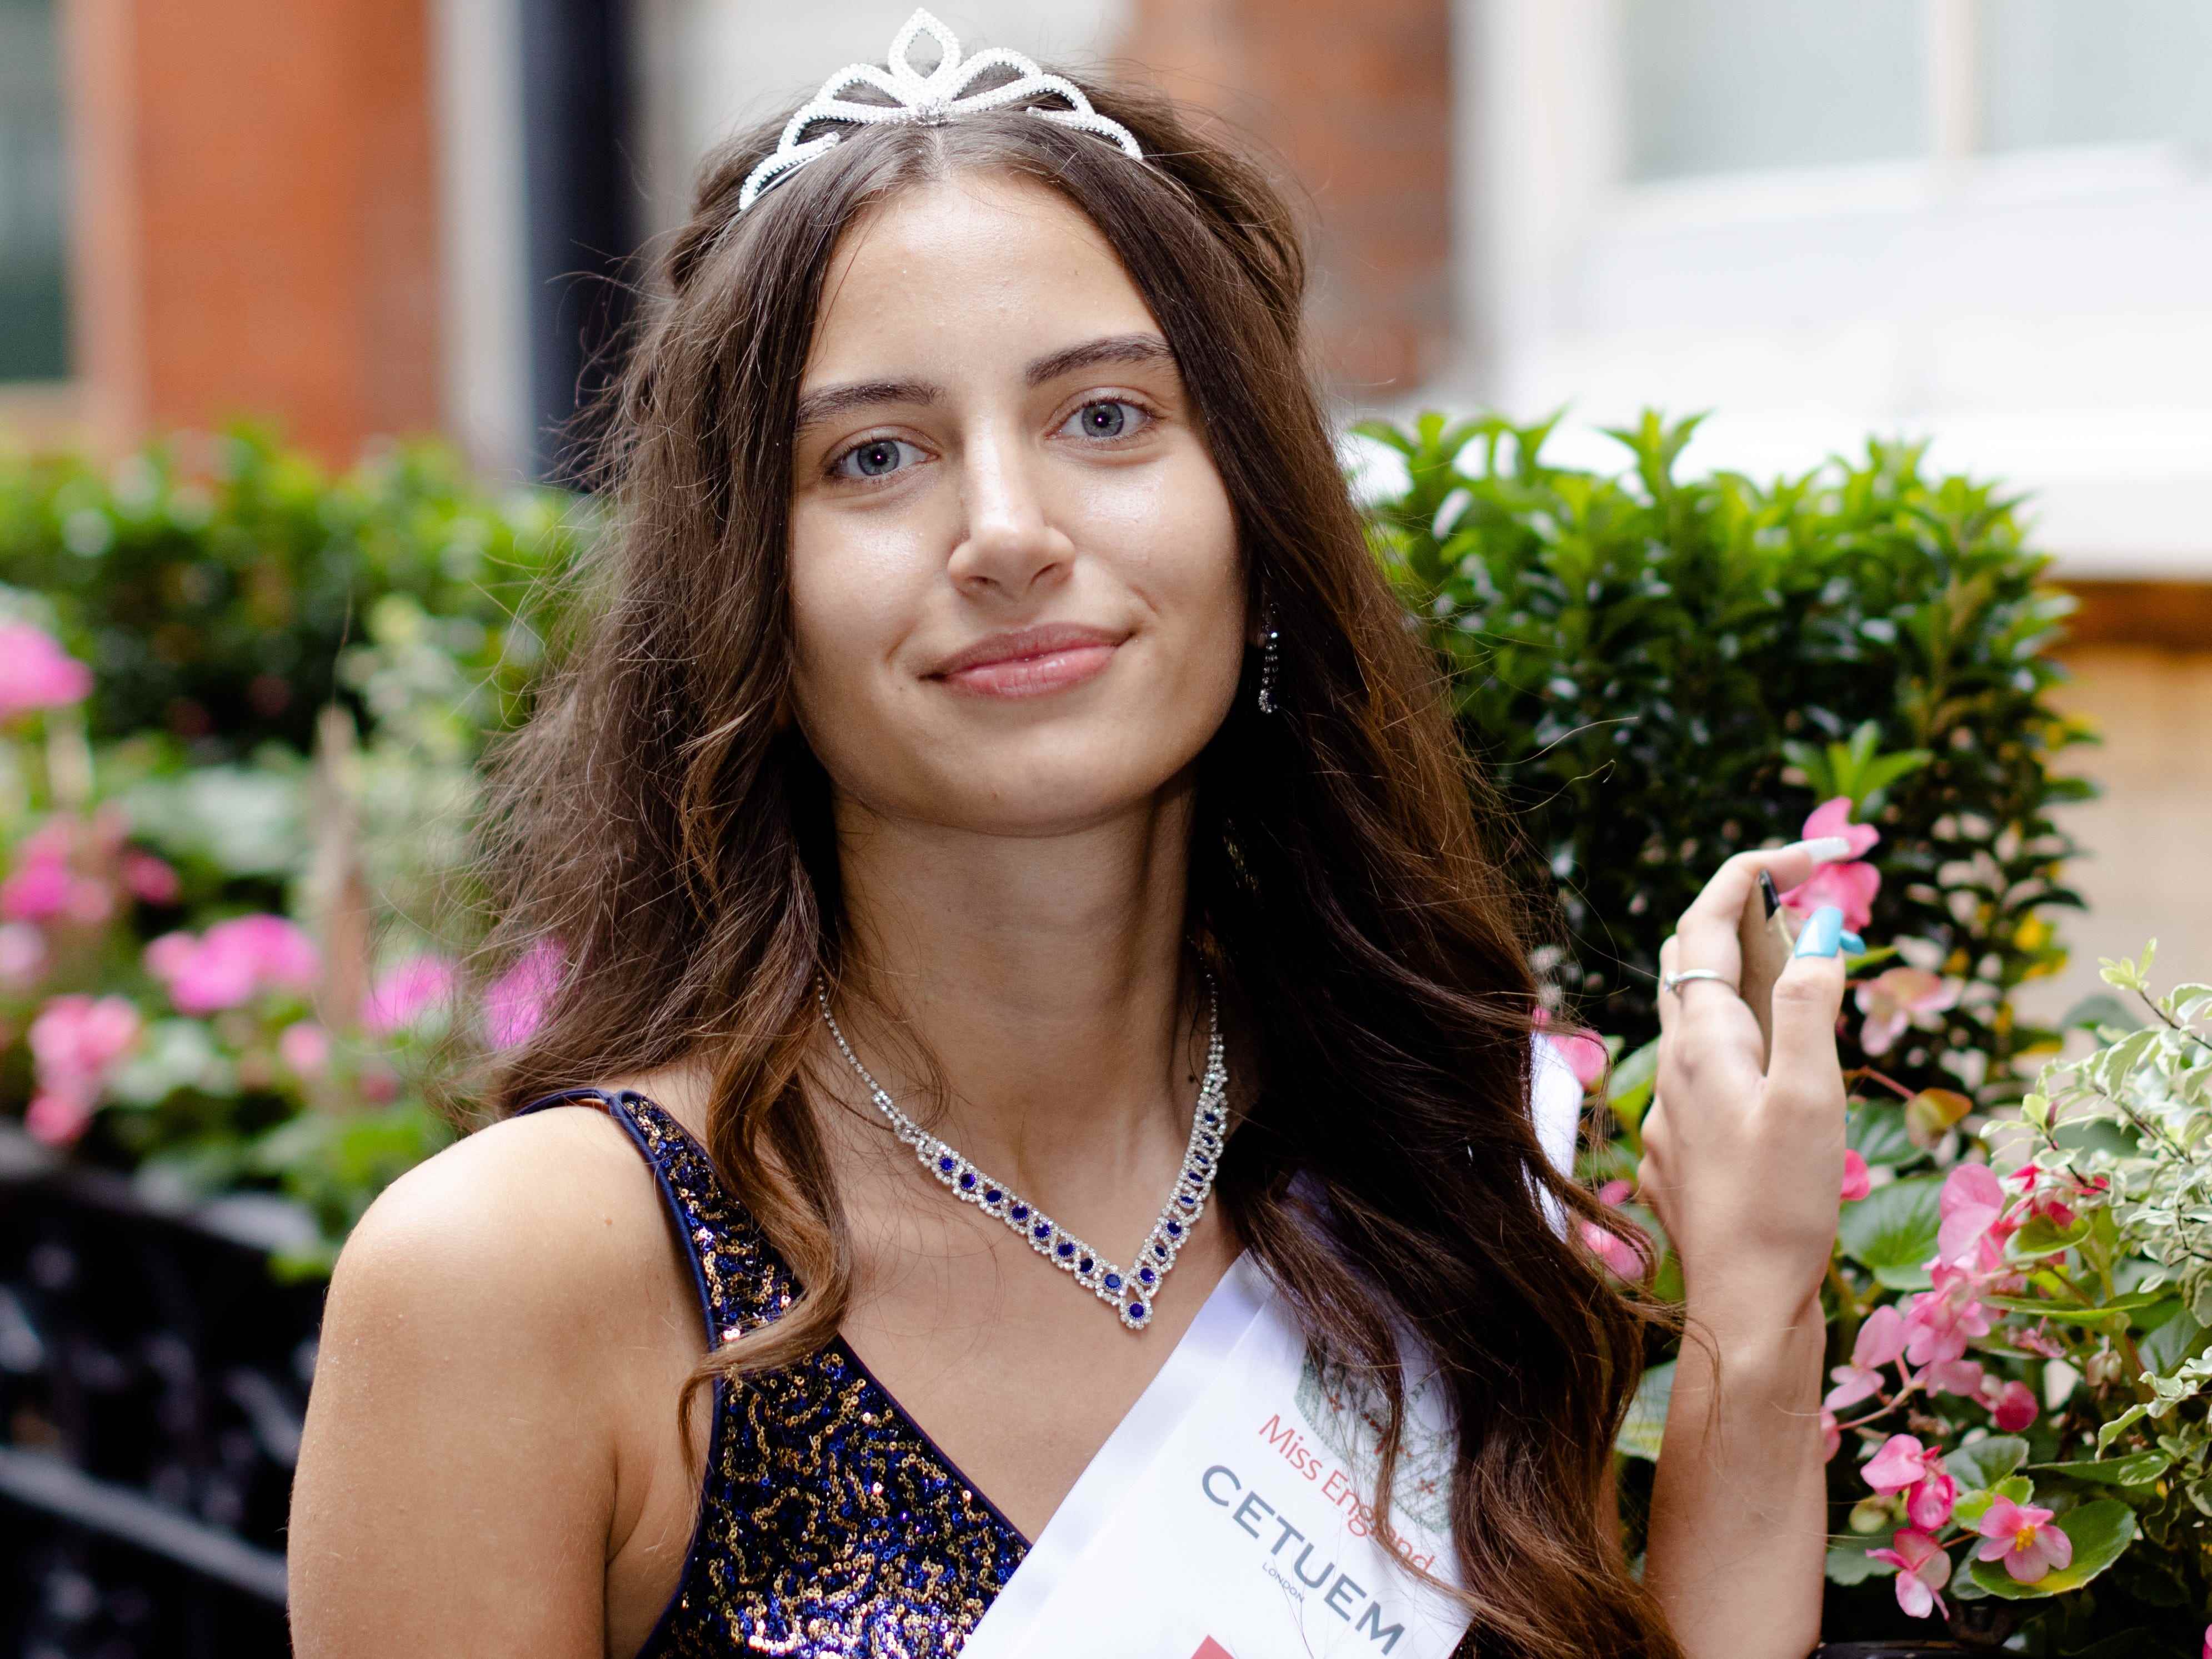 Melisa Raouf ist Finalistin für Miss England